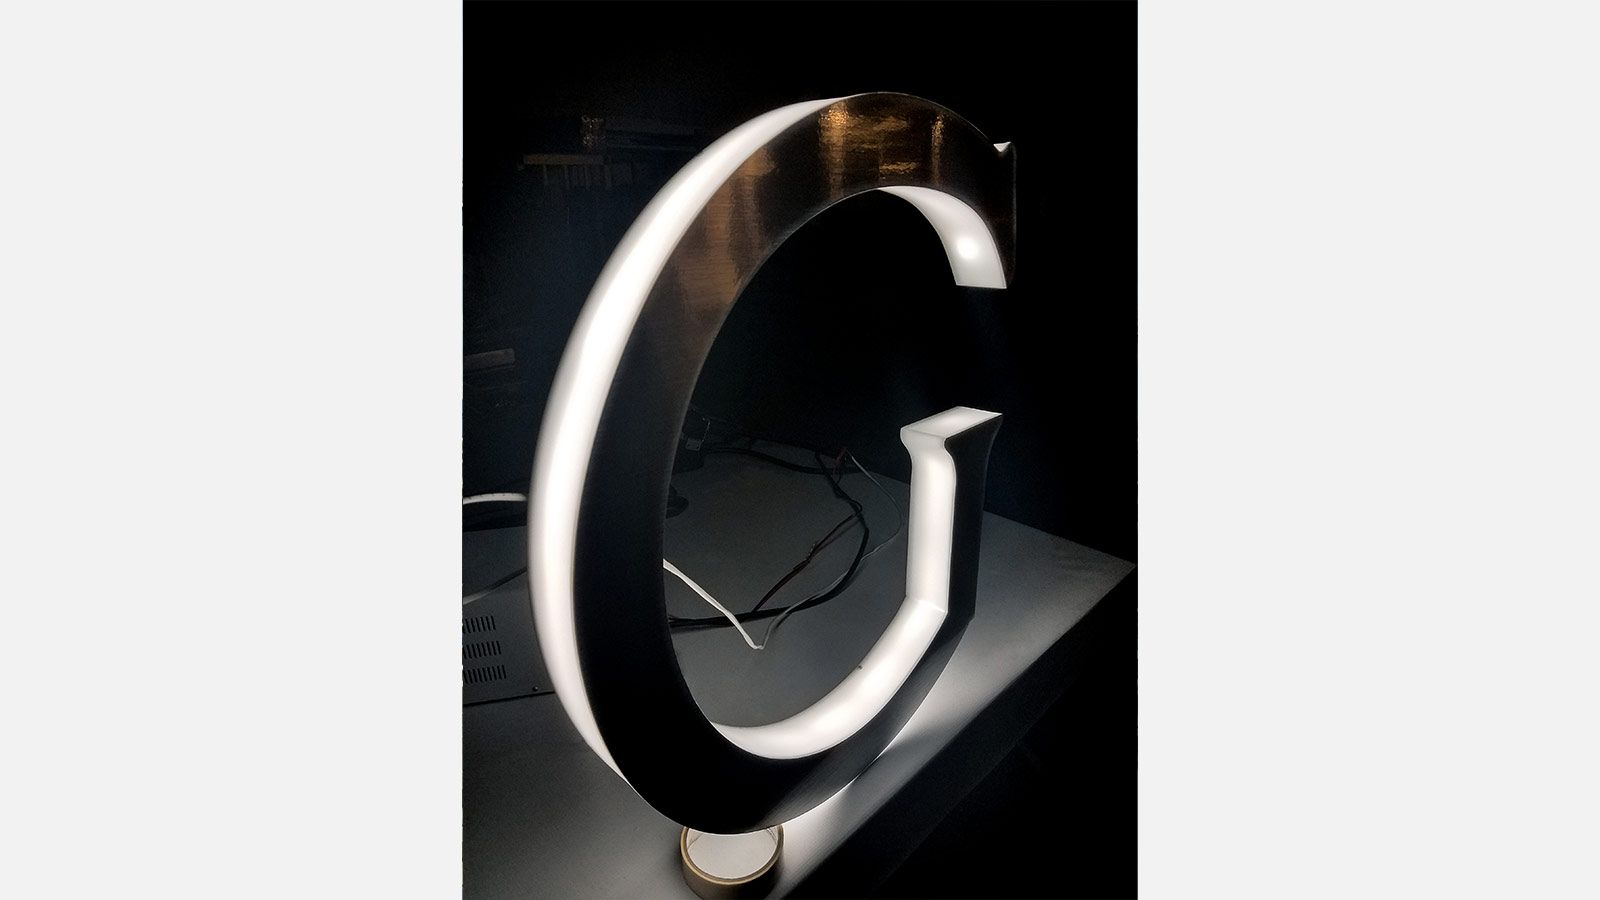 g letter shaped side illuminated display